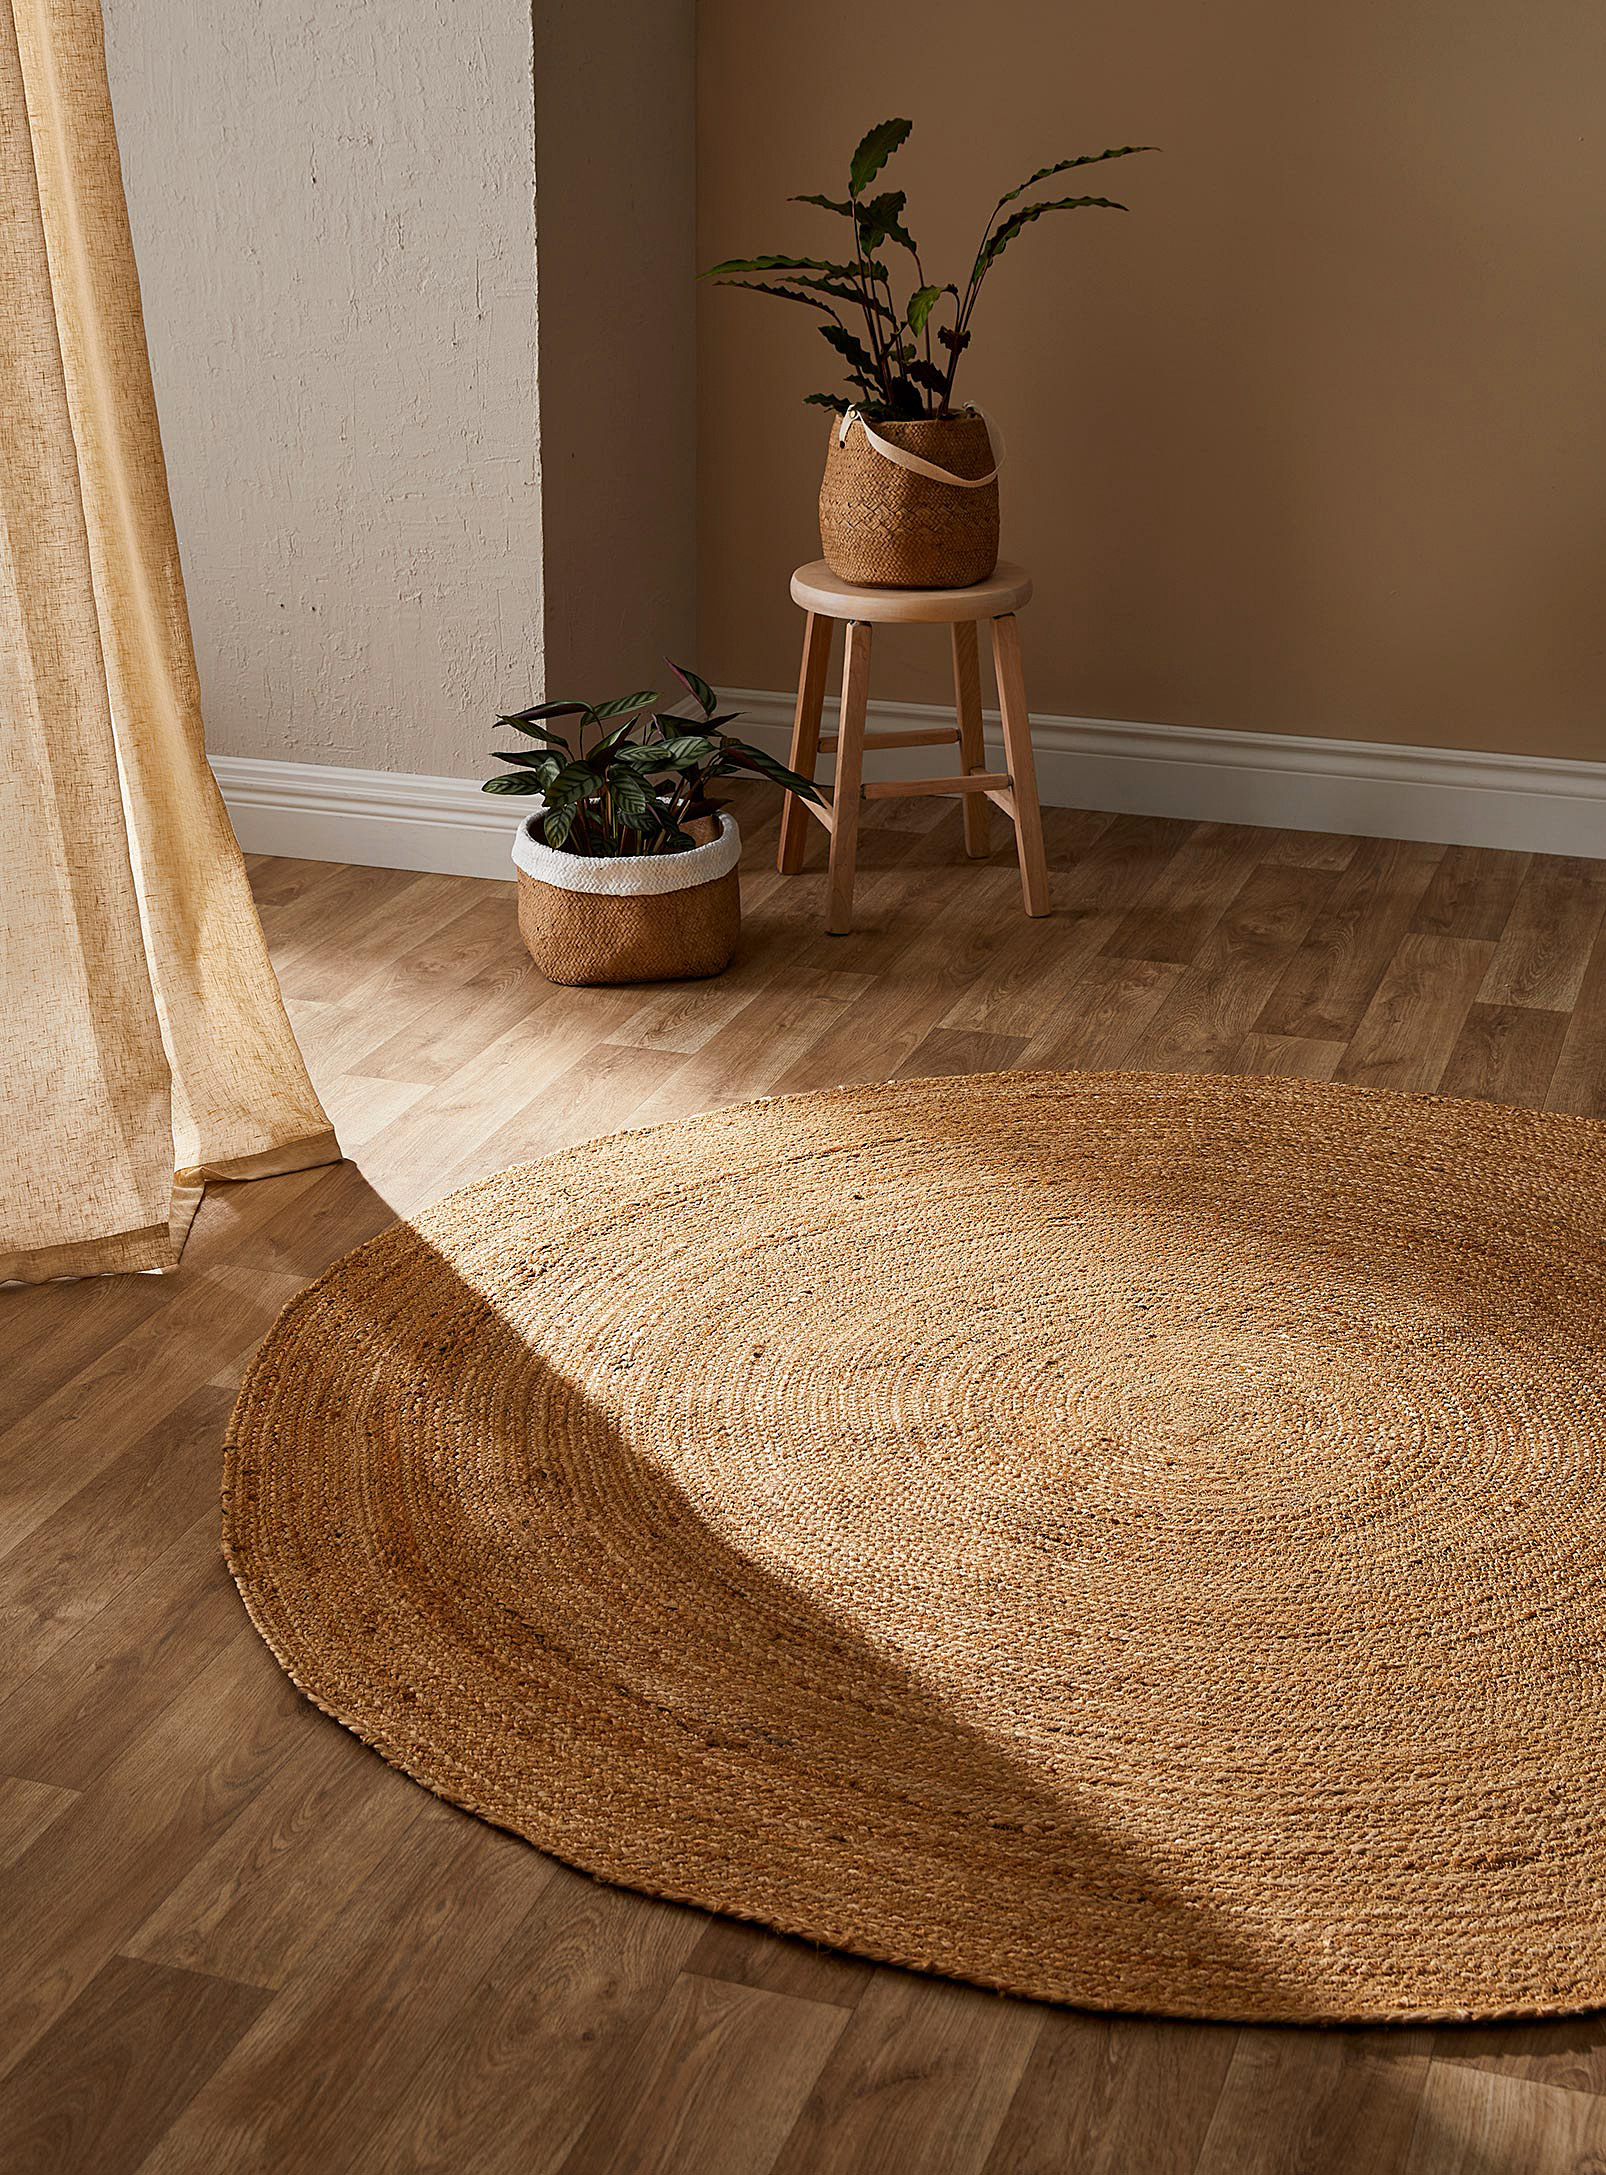 Simons Maison - Braided jute circular rug See available sizes